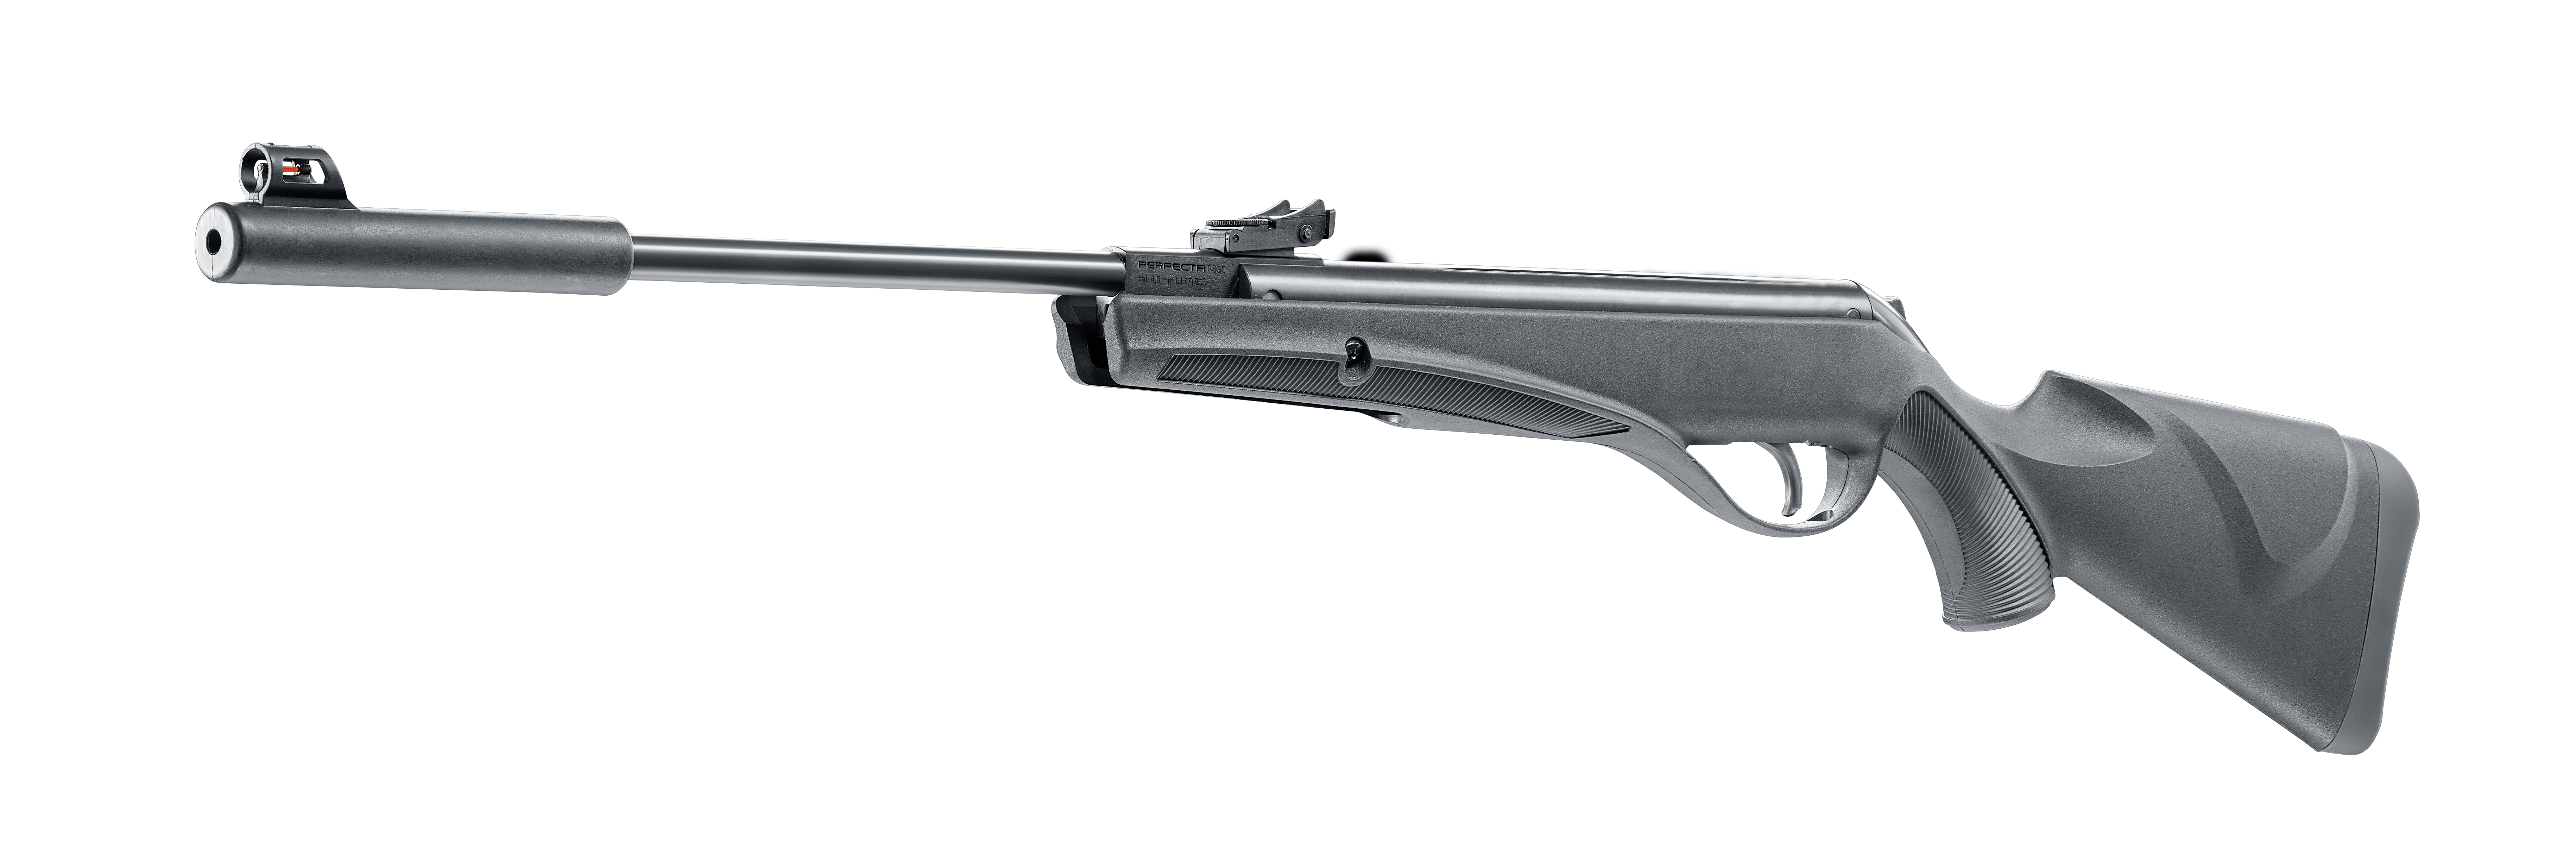 PERFECTA (Umarex) Airgun RS30 4.5 mm .177